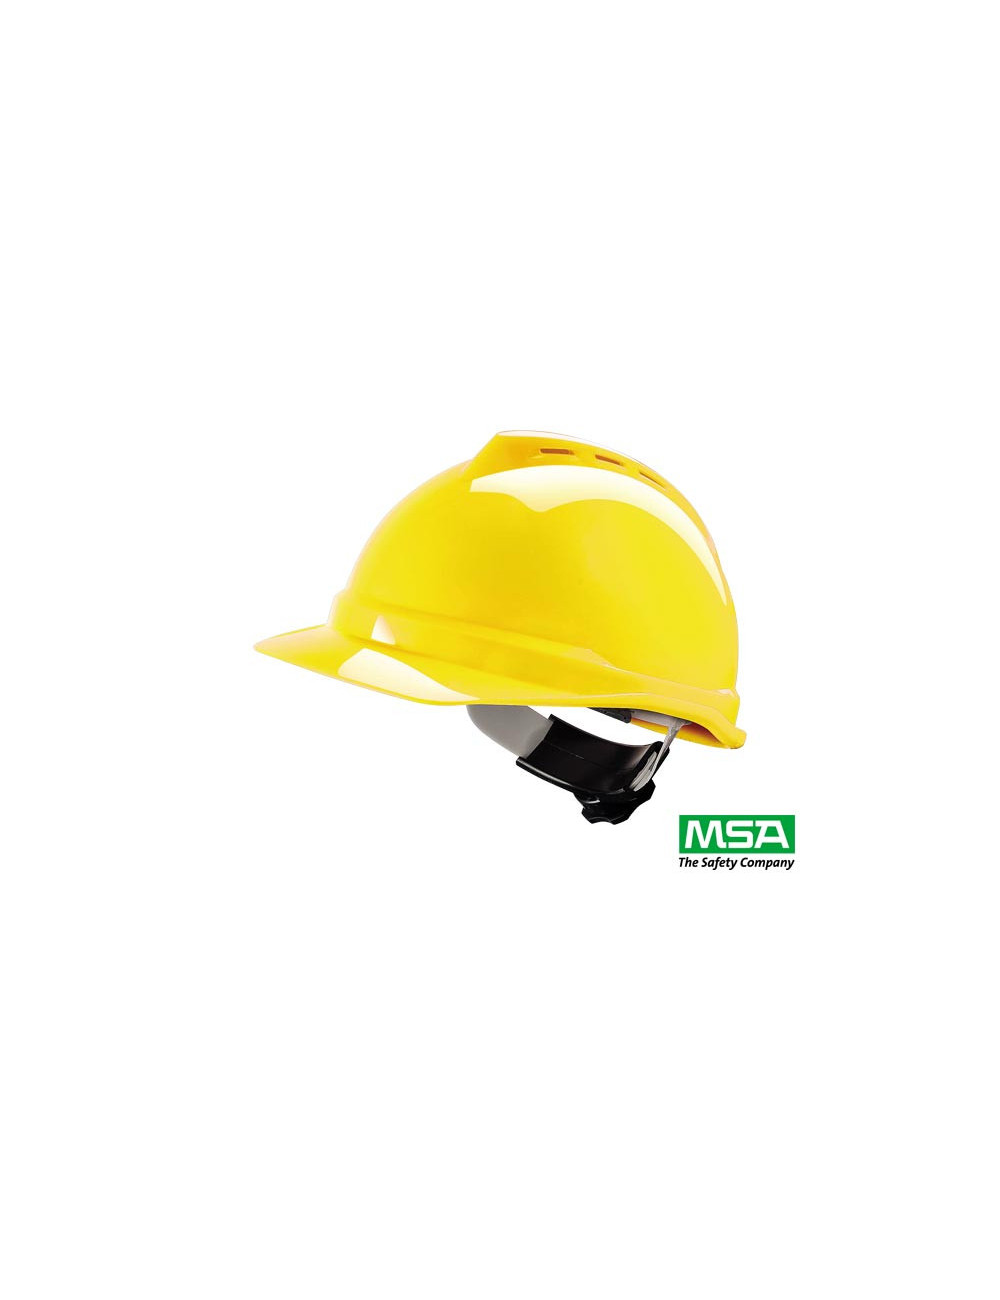 Helmet y yellow Msa Msa-kas-vg500-w